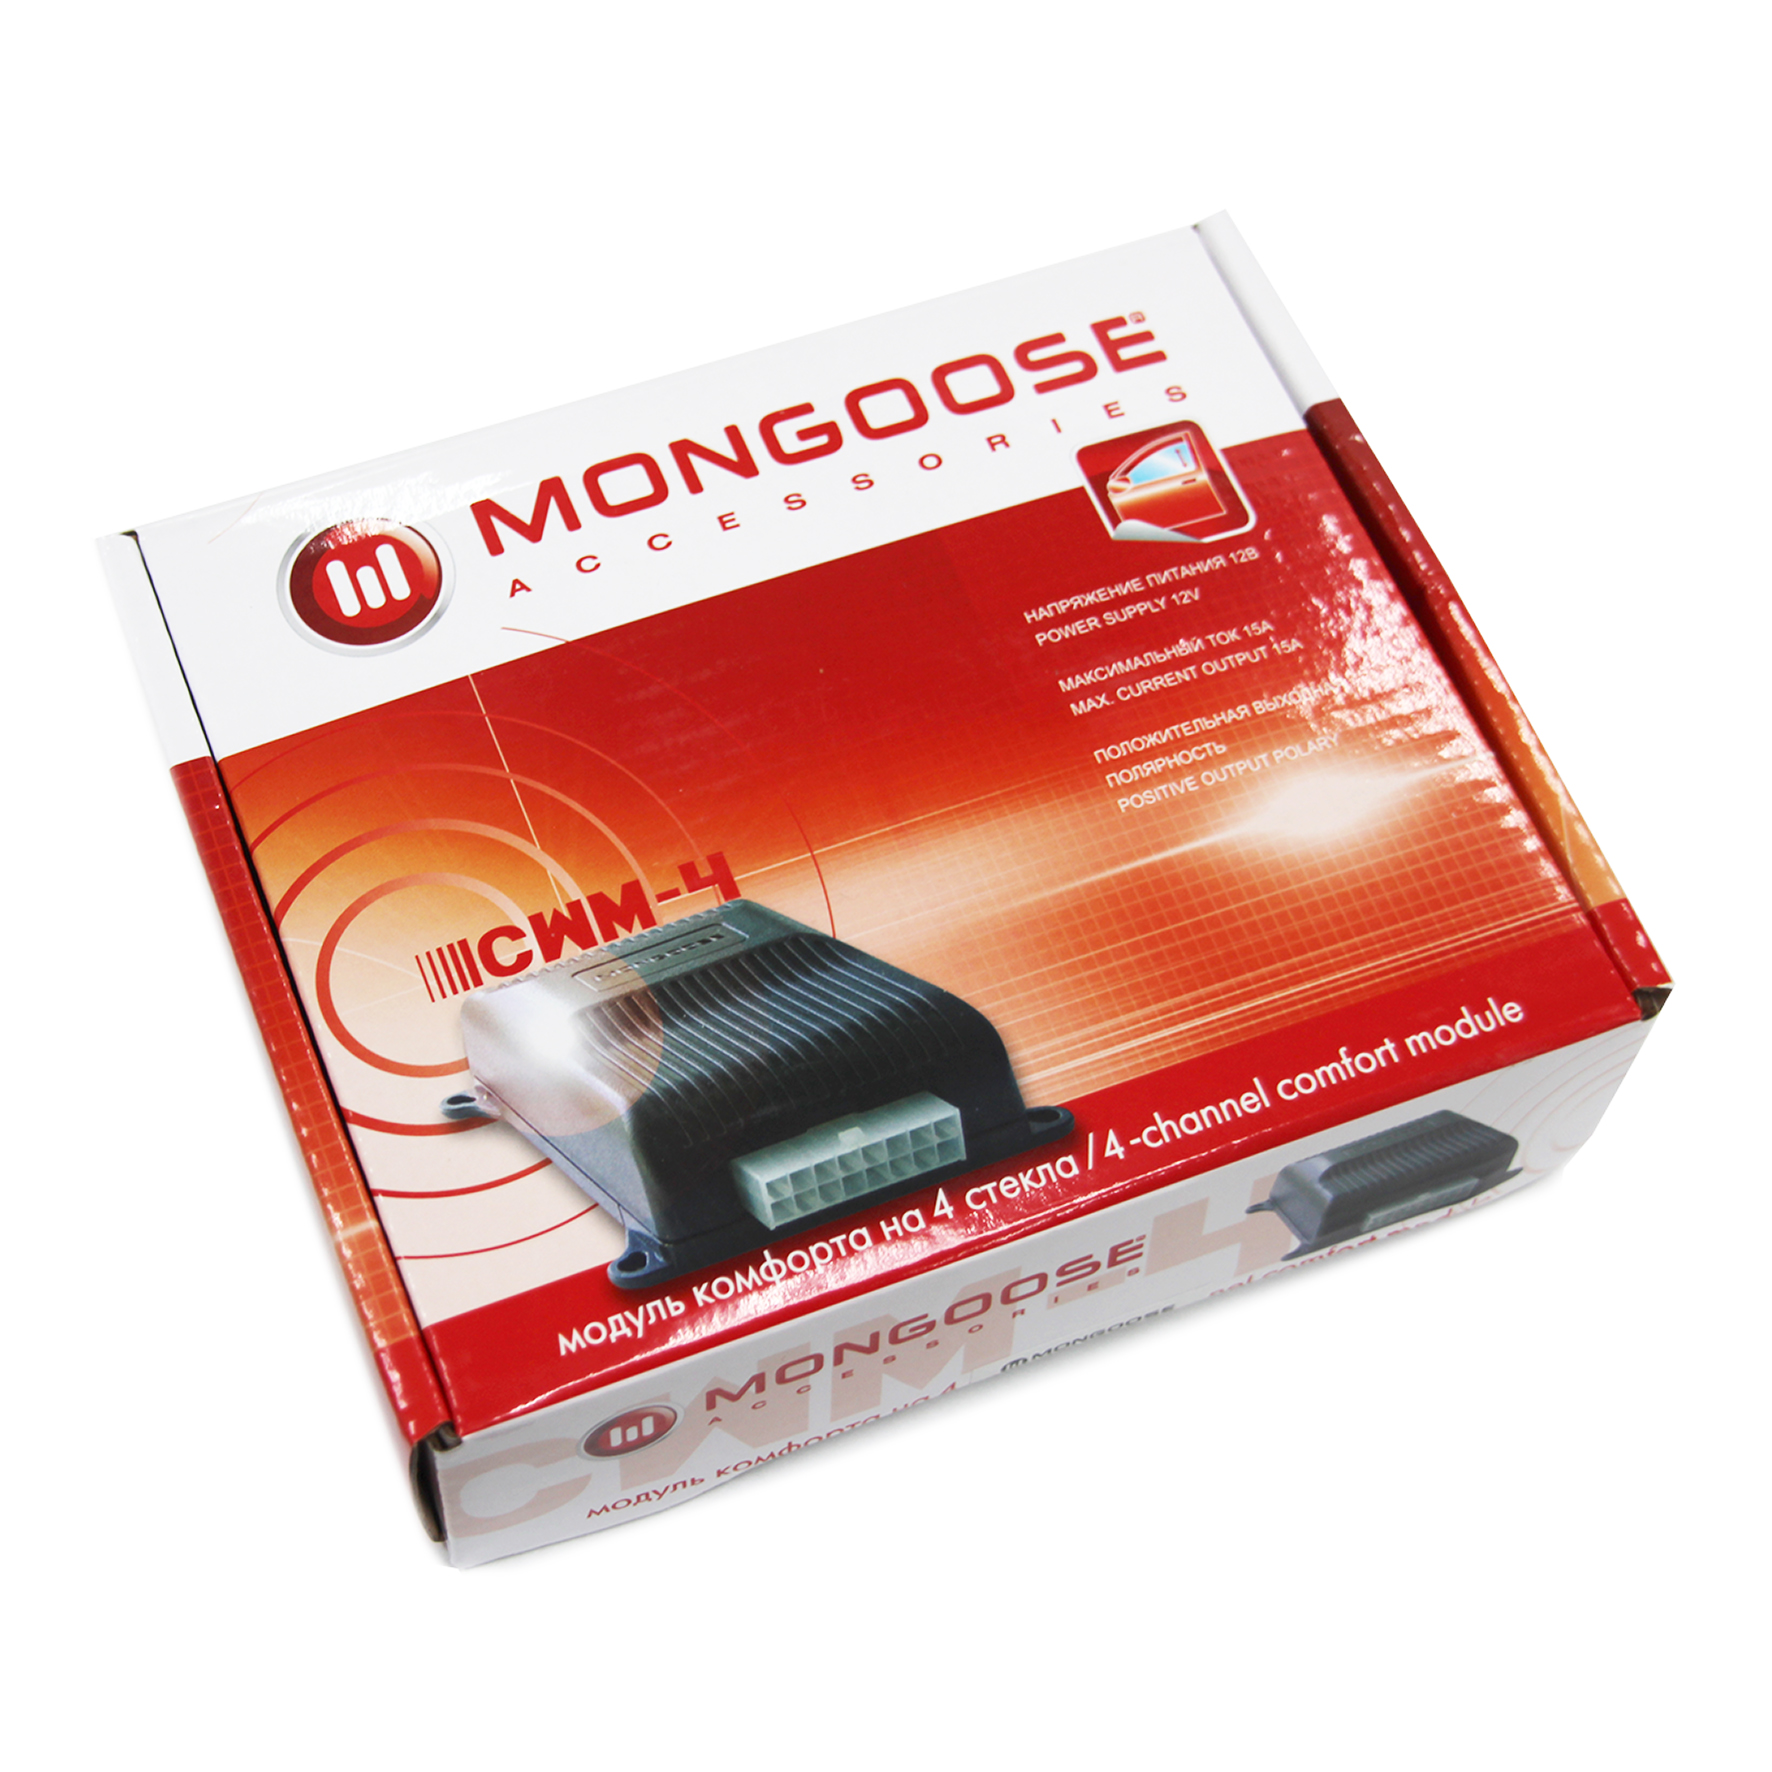  Mongoose CWM-4